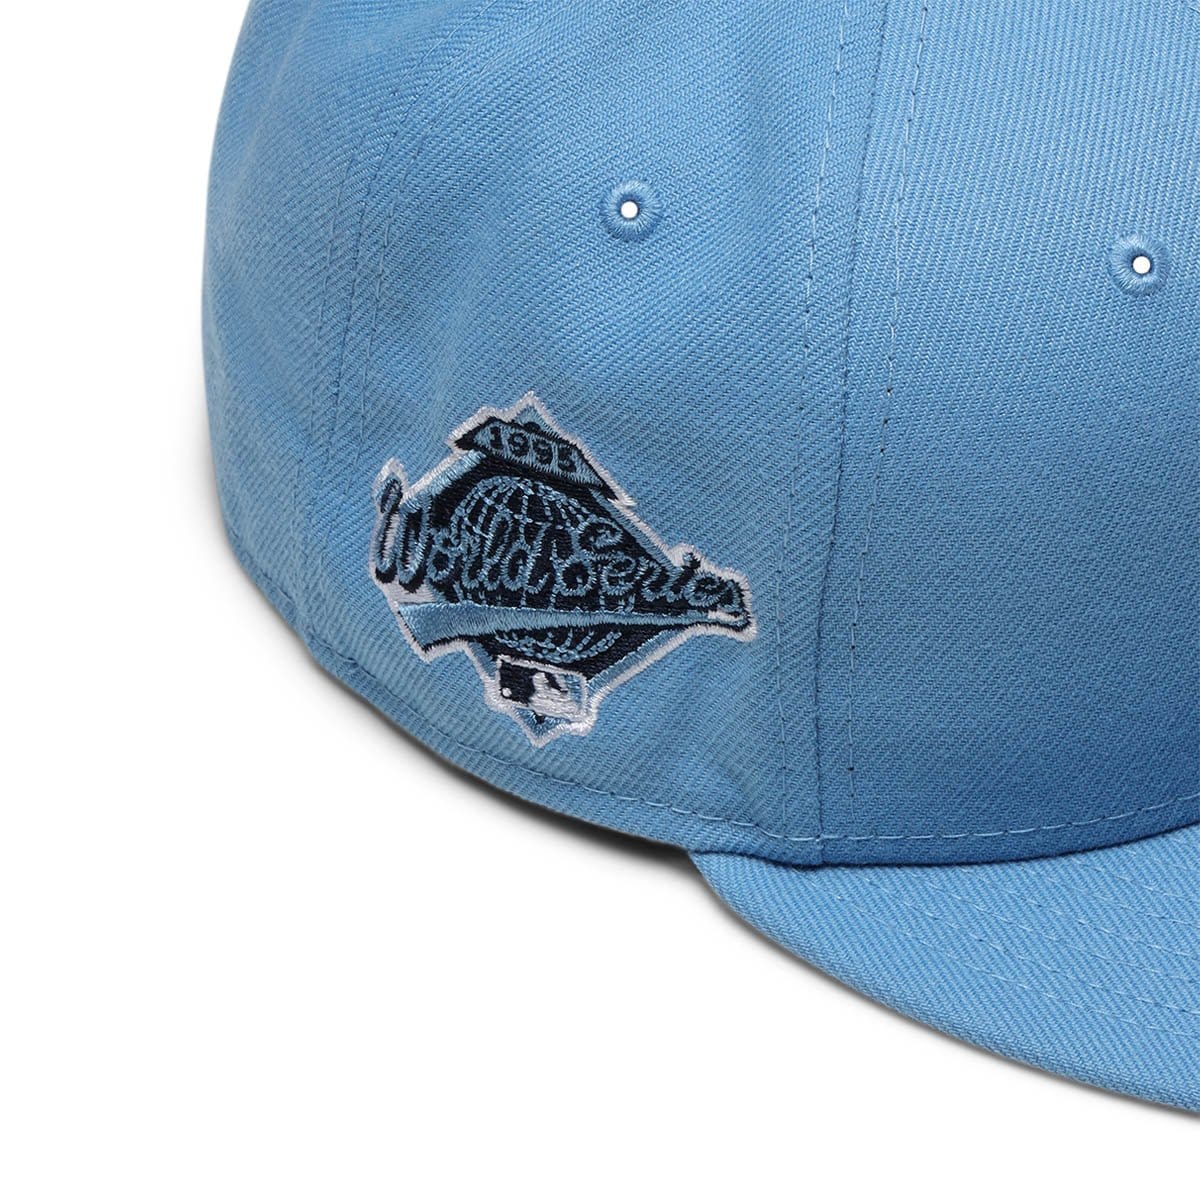 Men's Offset x Atlanta Braves New Era Light Blue 59FIFTY Fitted Hat